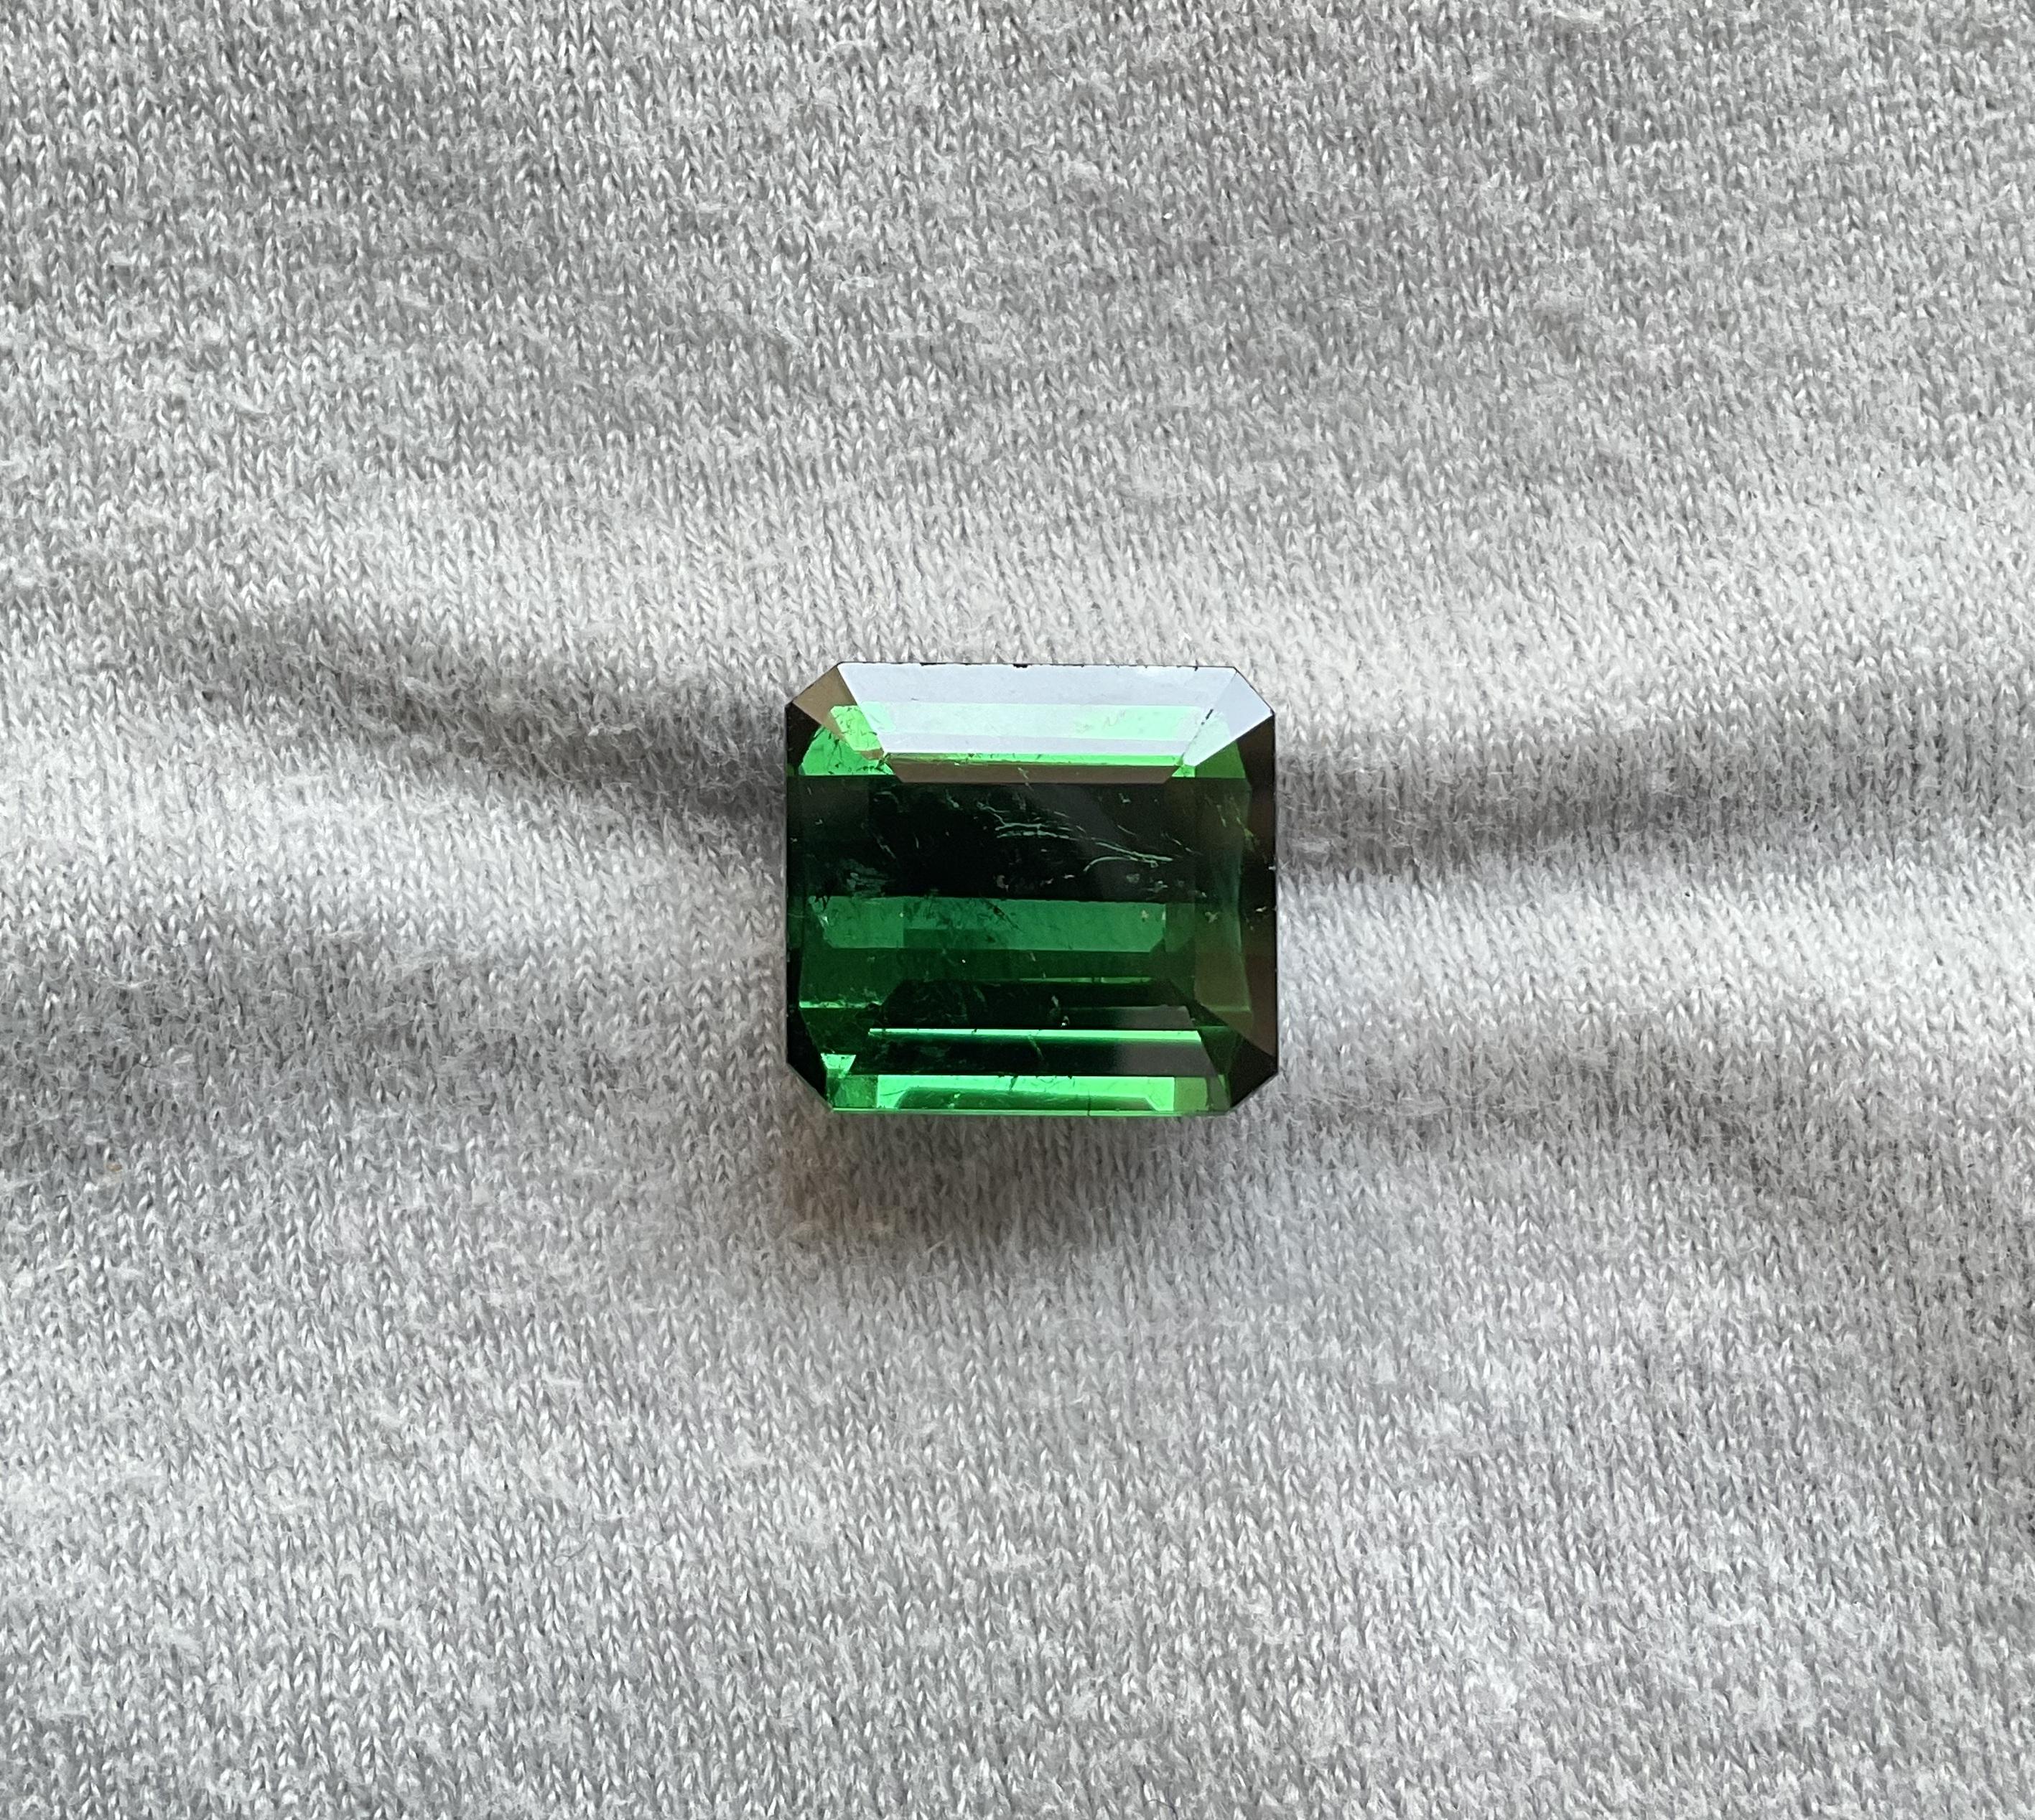 11.86 carats Nigeria green tourmaline Top Quality Octagon Cut stone natural Gem For Sale 1